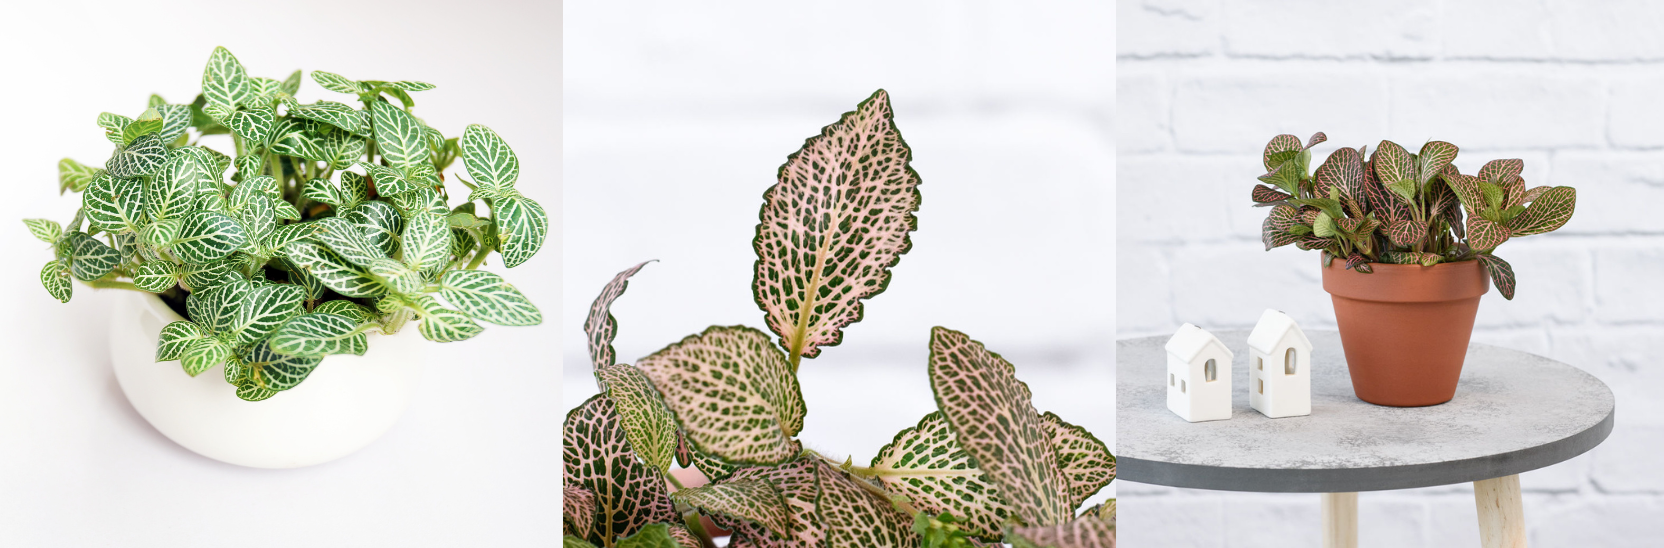 20 Fast Growing Indoor Plants - Nerve Plant